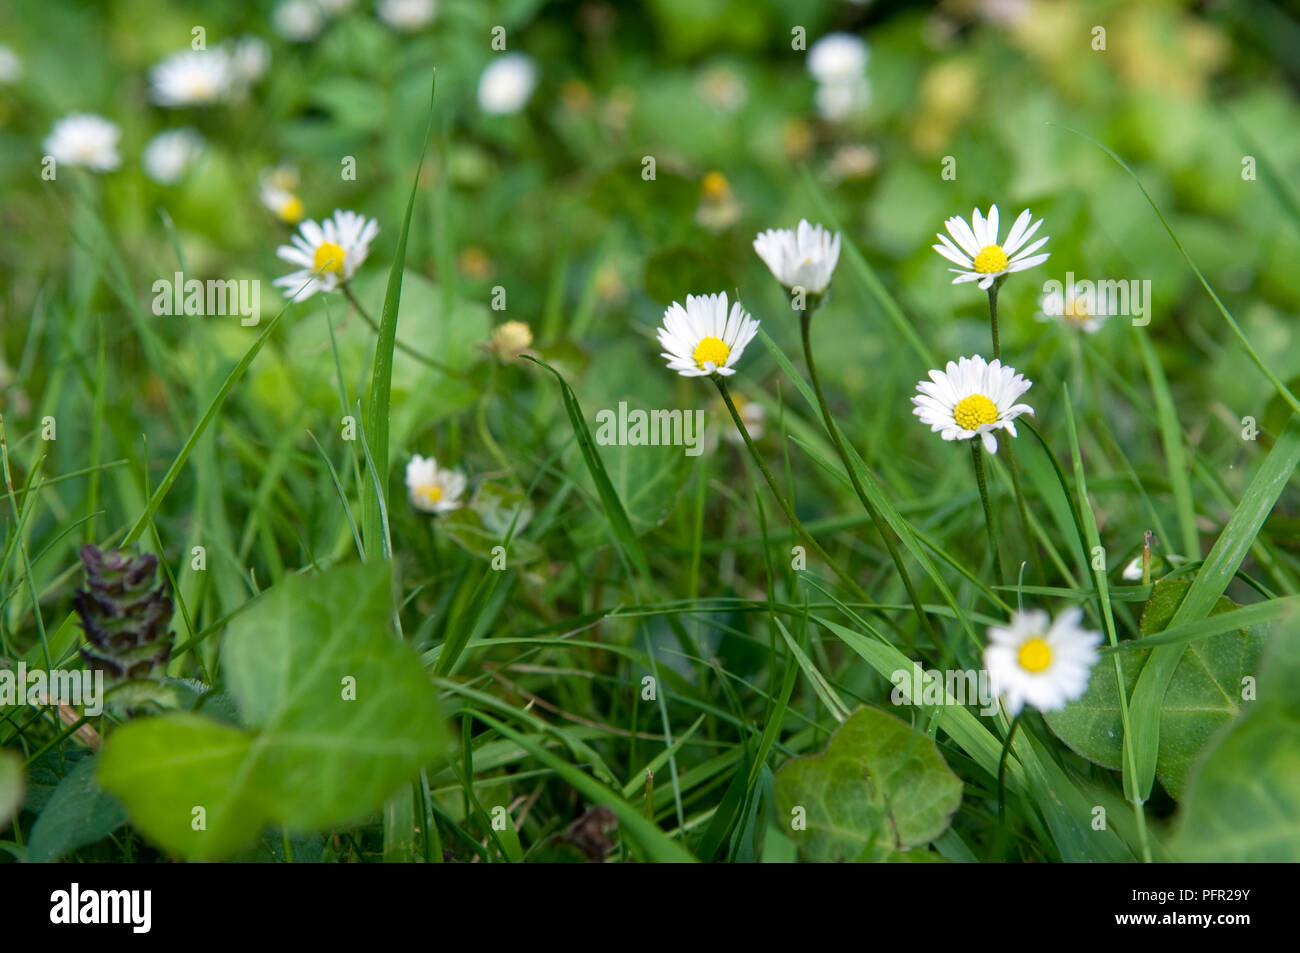 Bellis perennis (Daisy), close-up of flowers amongst greenery Stock Photo